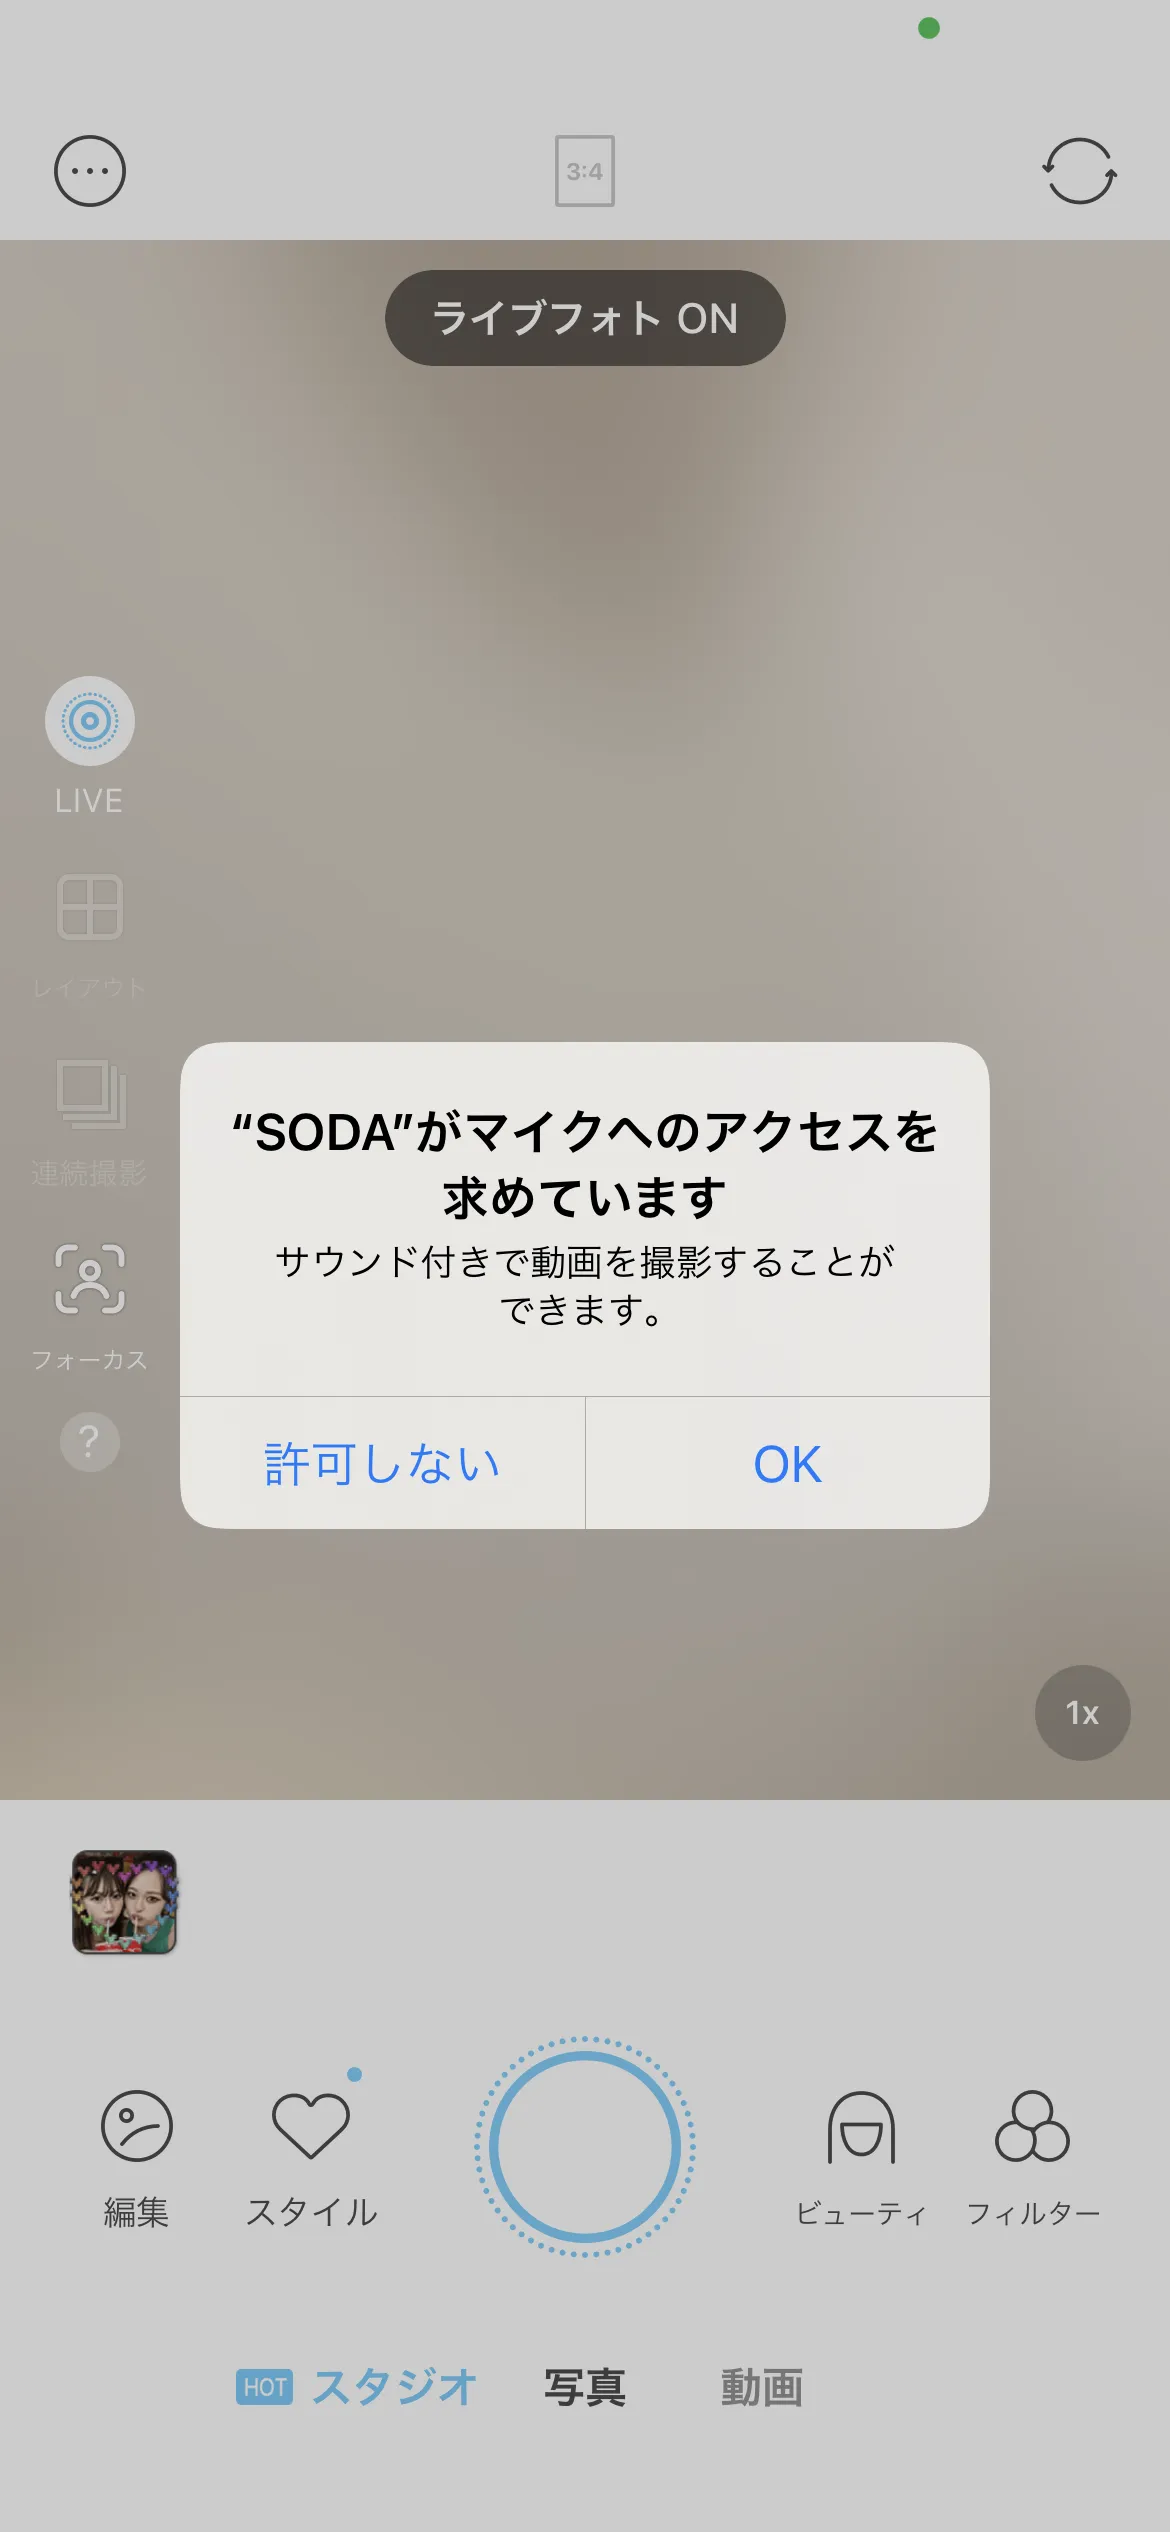 SODA ホーム screen